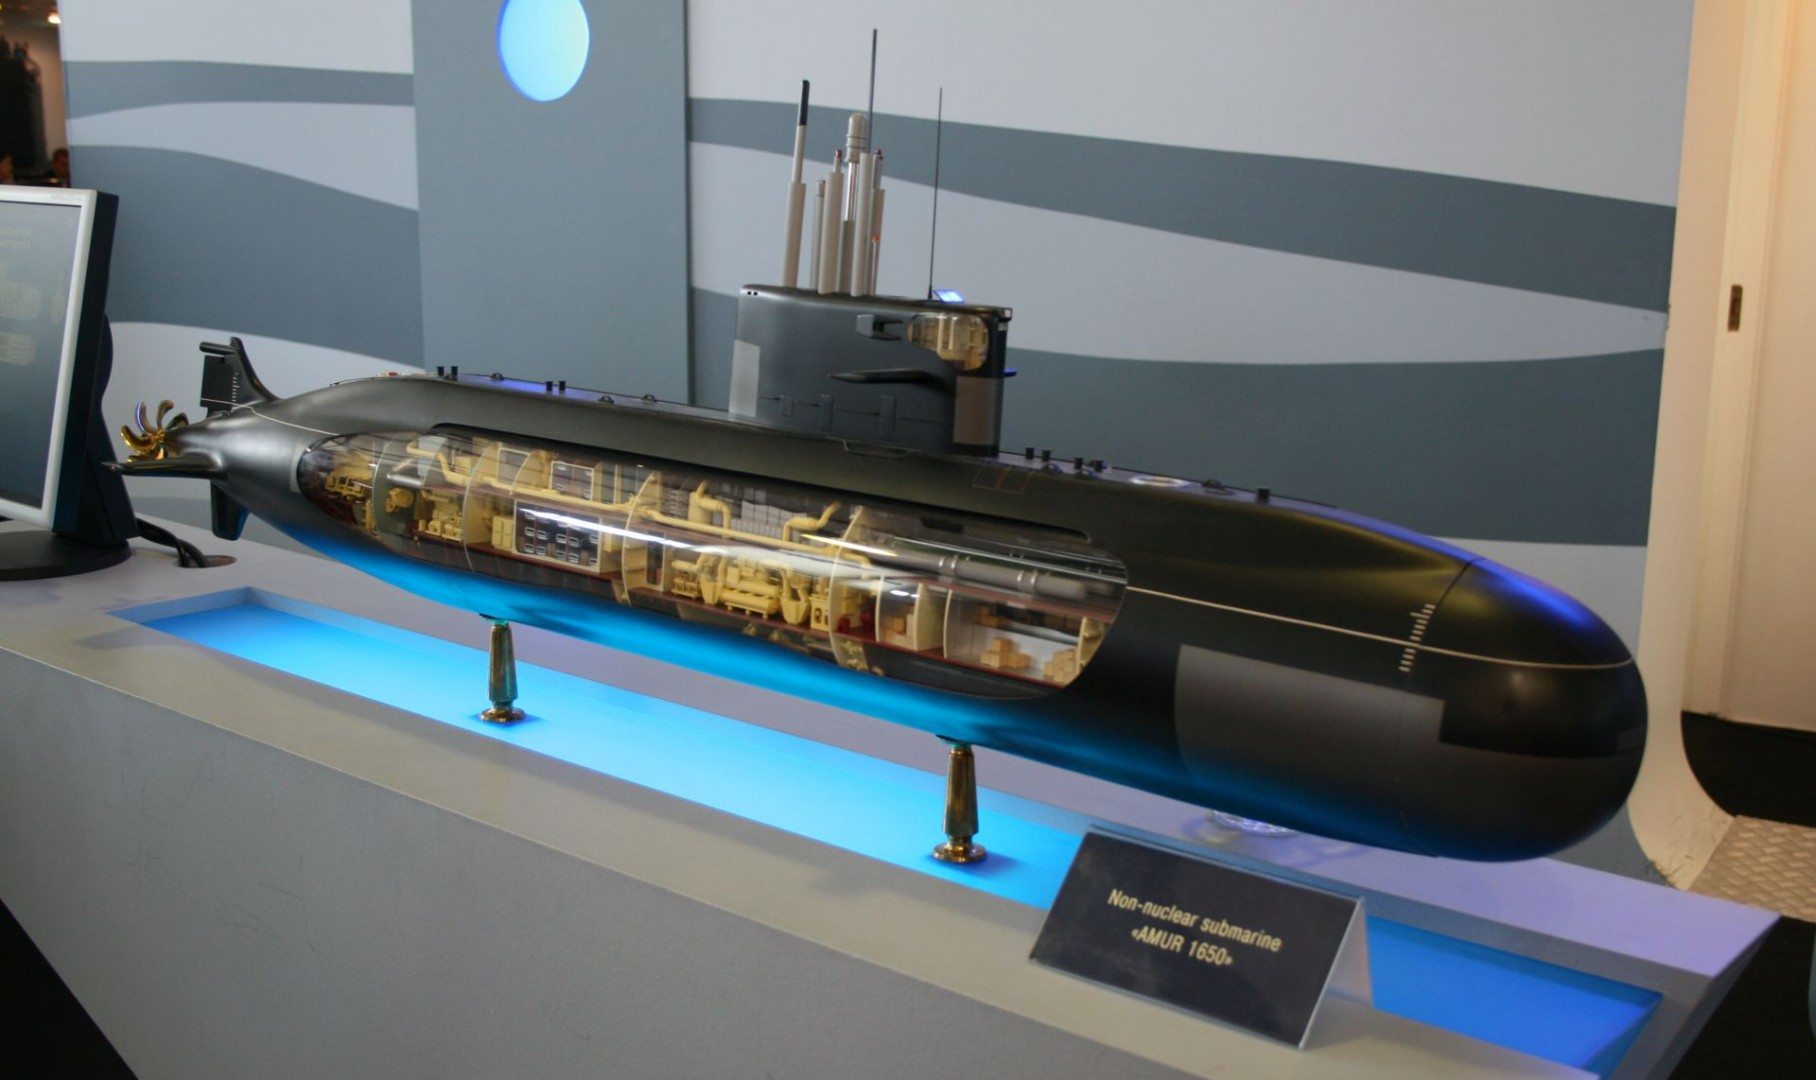 Amur-1650 class submarine